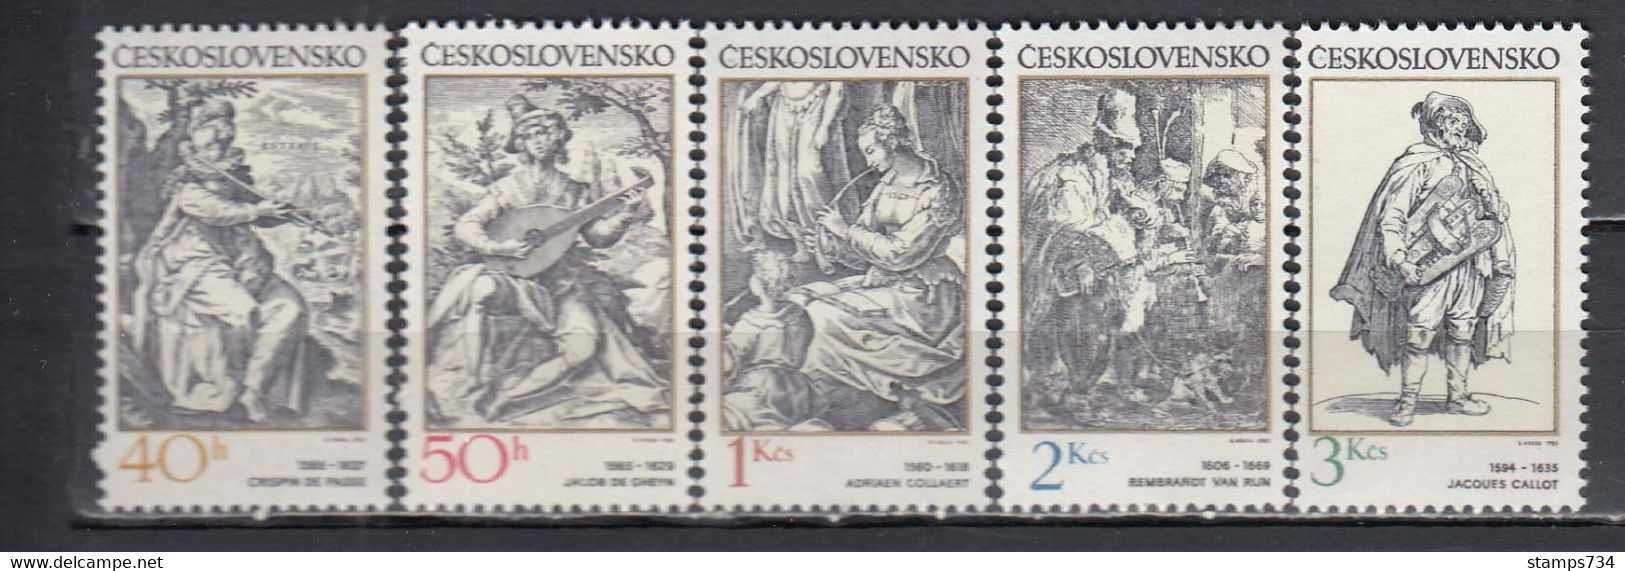 Czechoslovakia 1982 - Music Motifs On Old Engravings, Mi-Nr. 2661/65, MNH** - Neufs